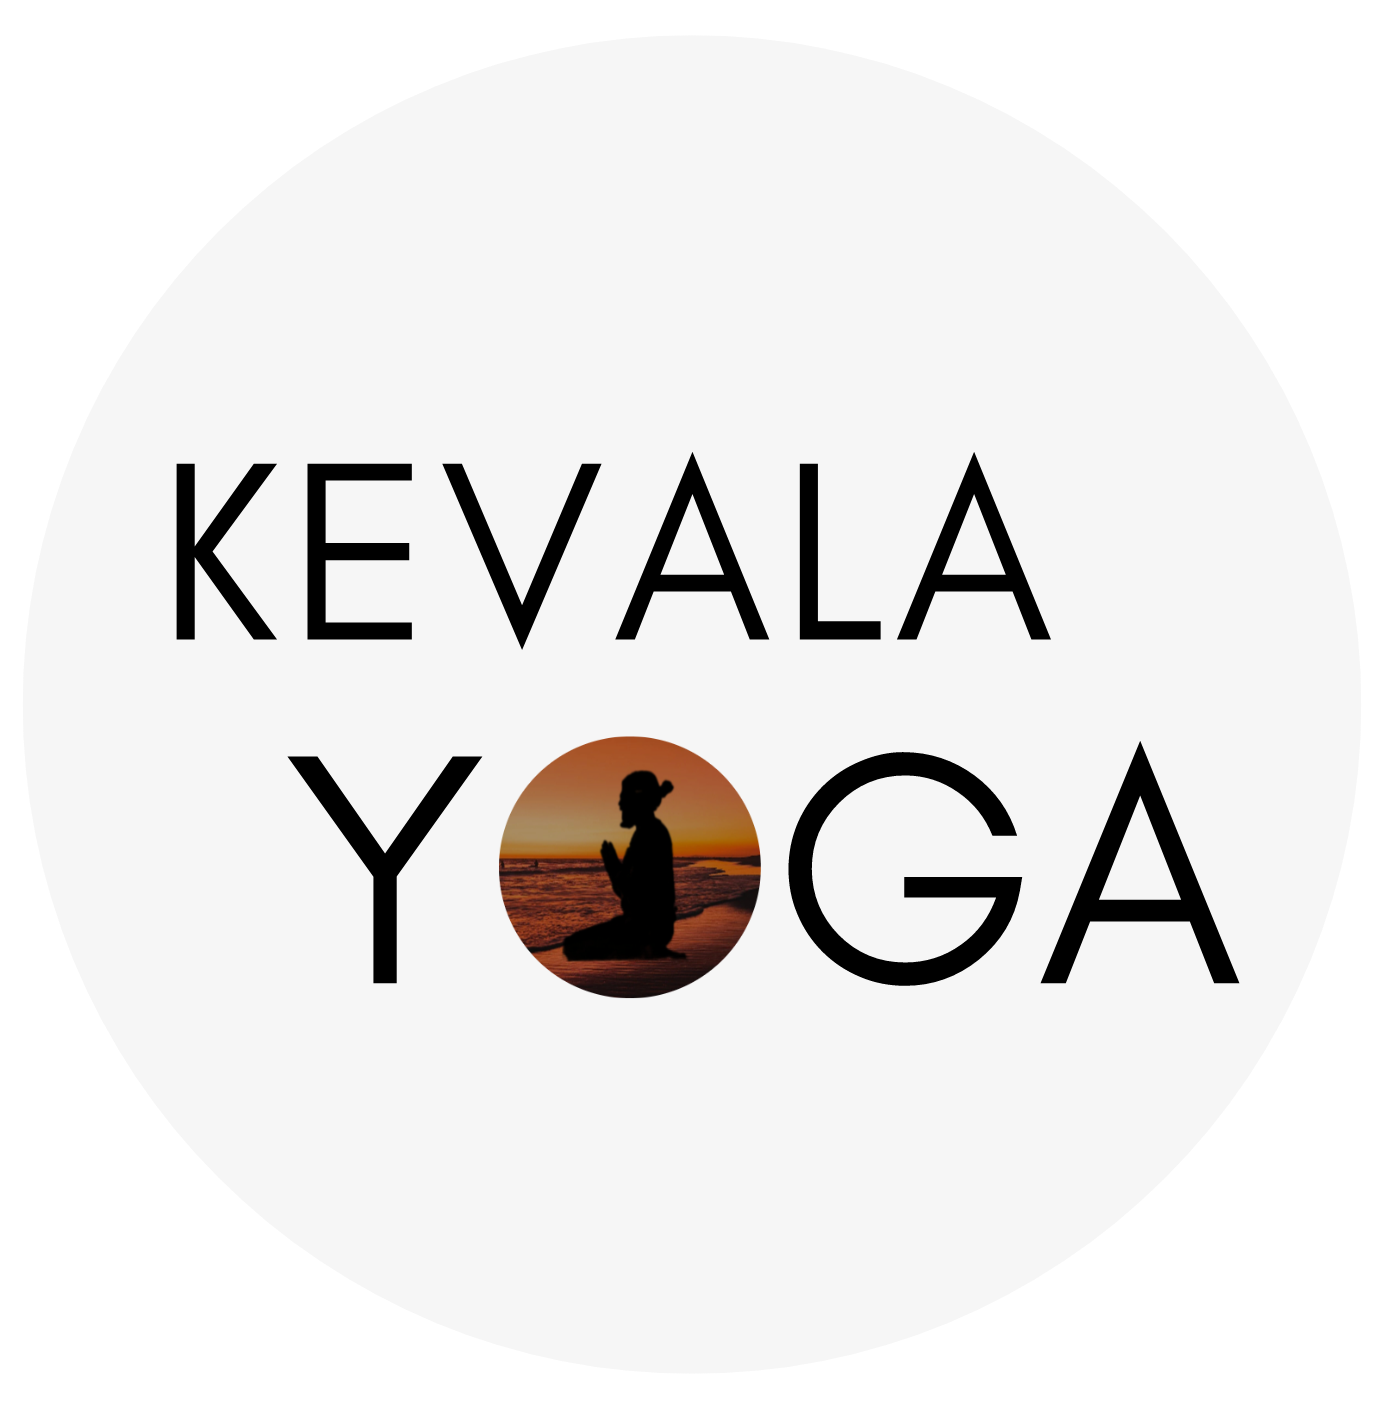 Kevala Yoga: Yoga Studio in White Rock and South Surrey